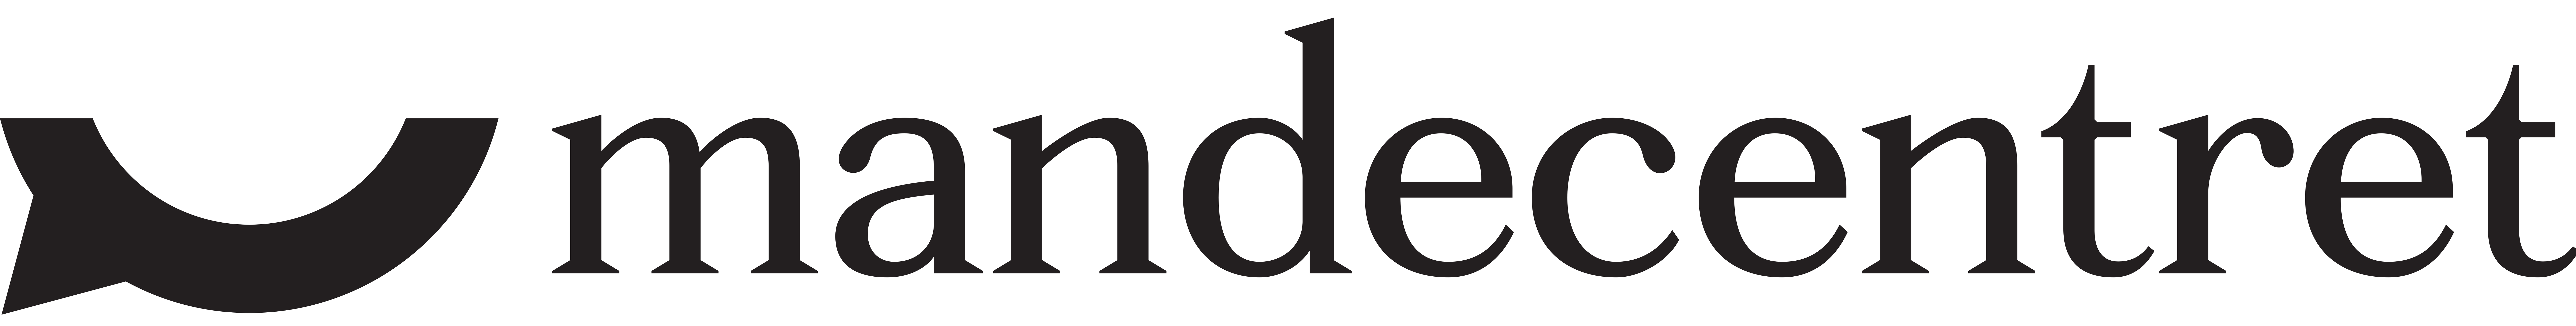 Mandecentrets logo